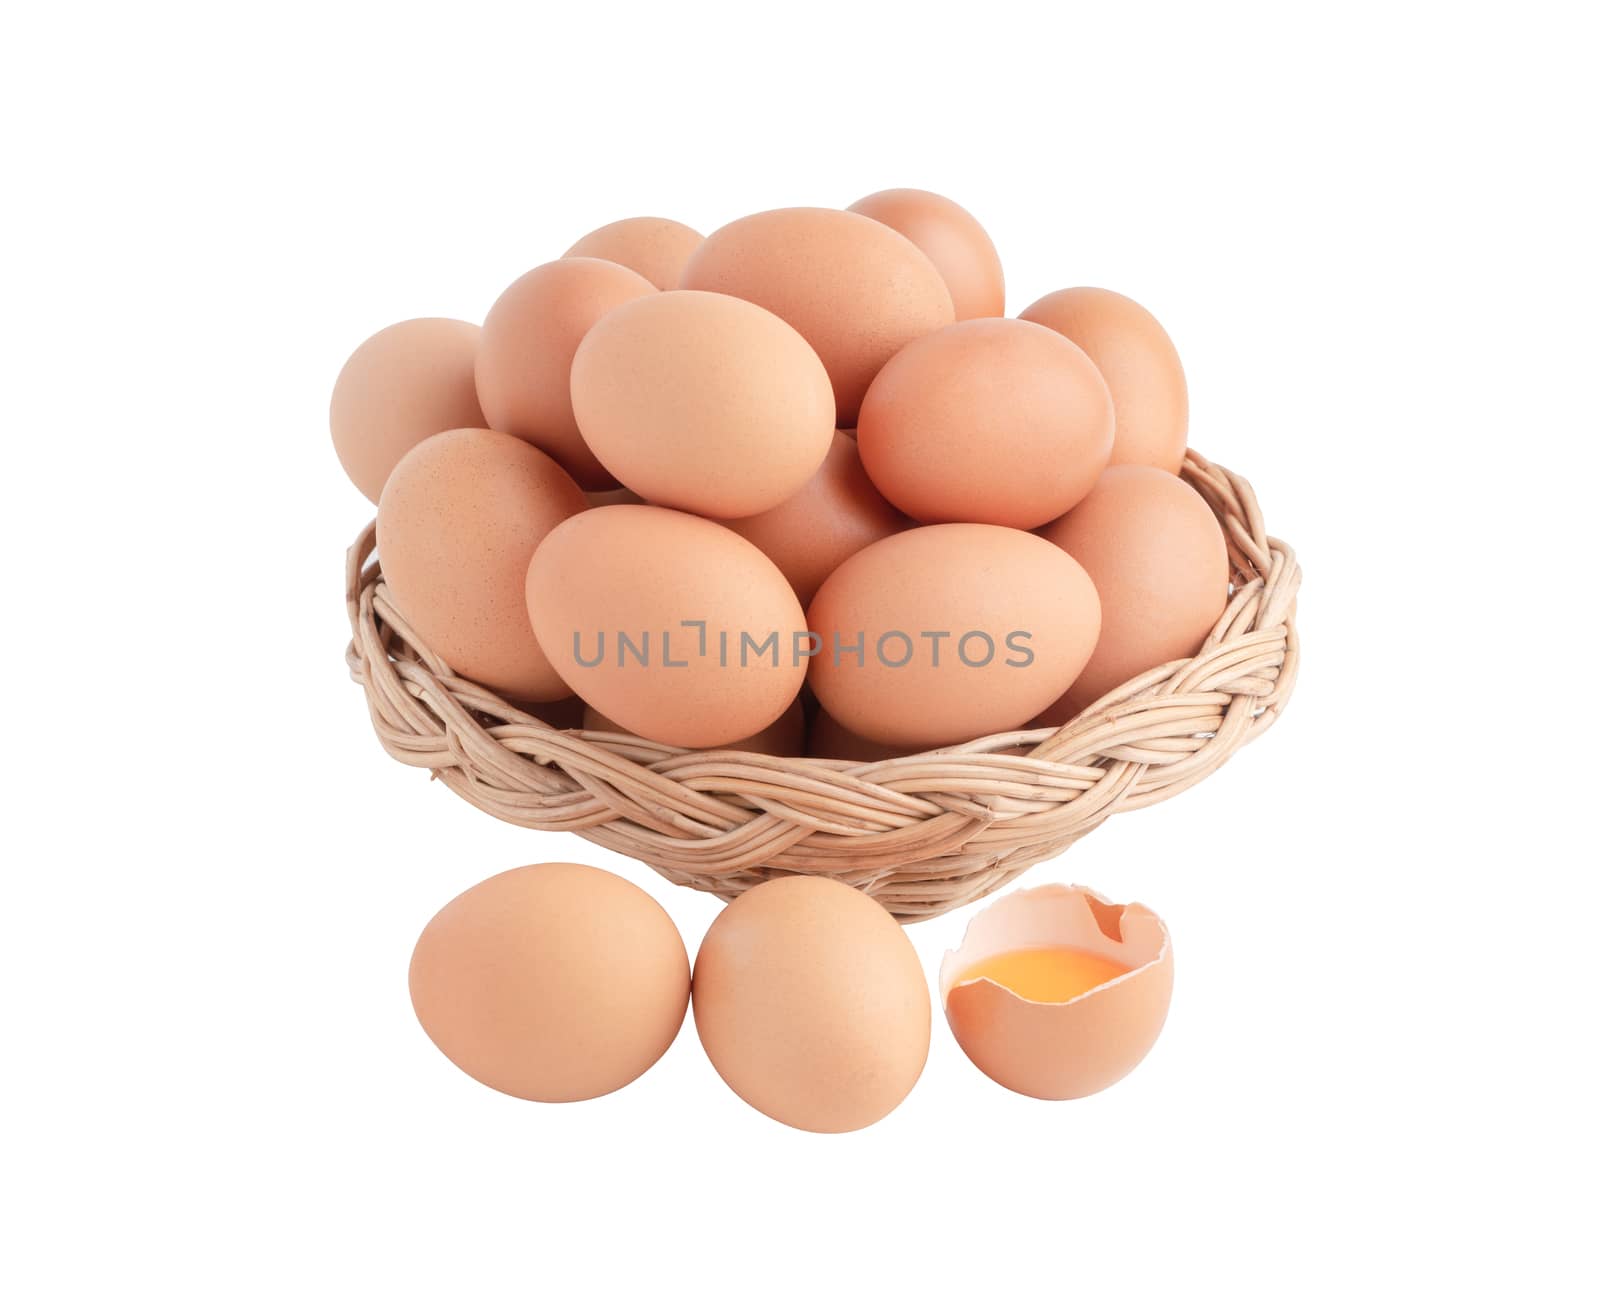 Chicken eggs in the wicker basket and one egg broken by Nikkikii